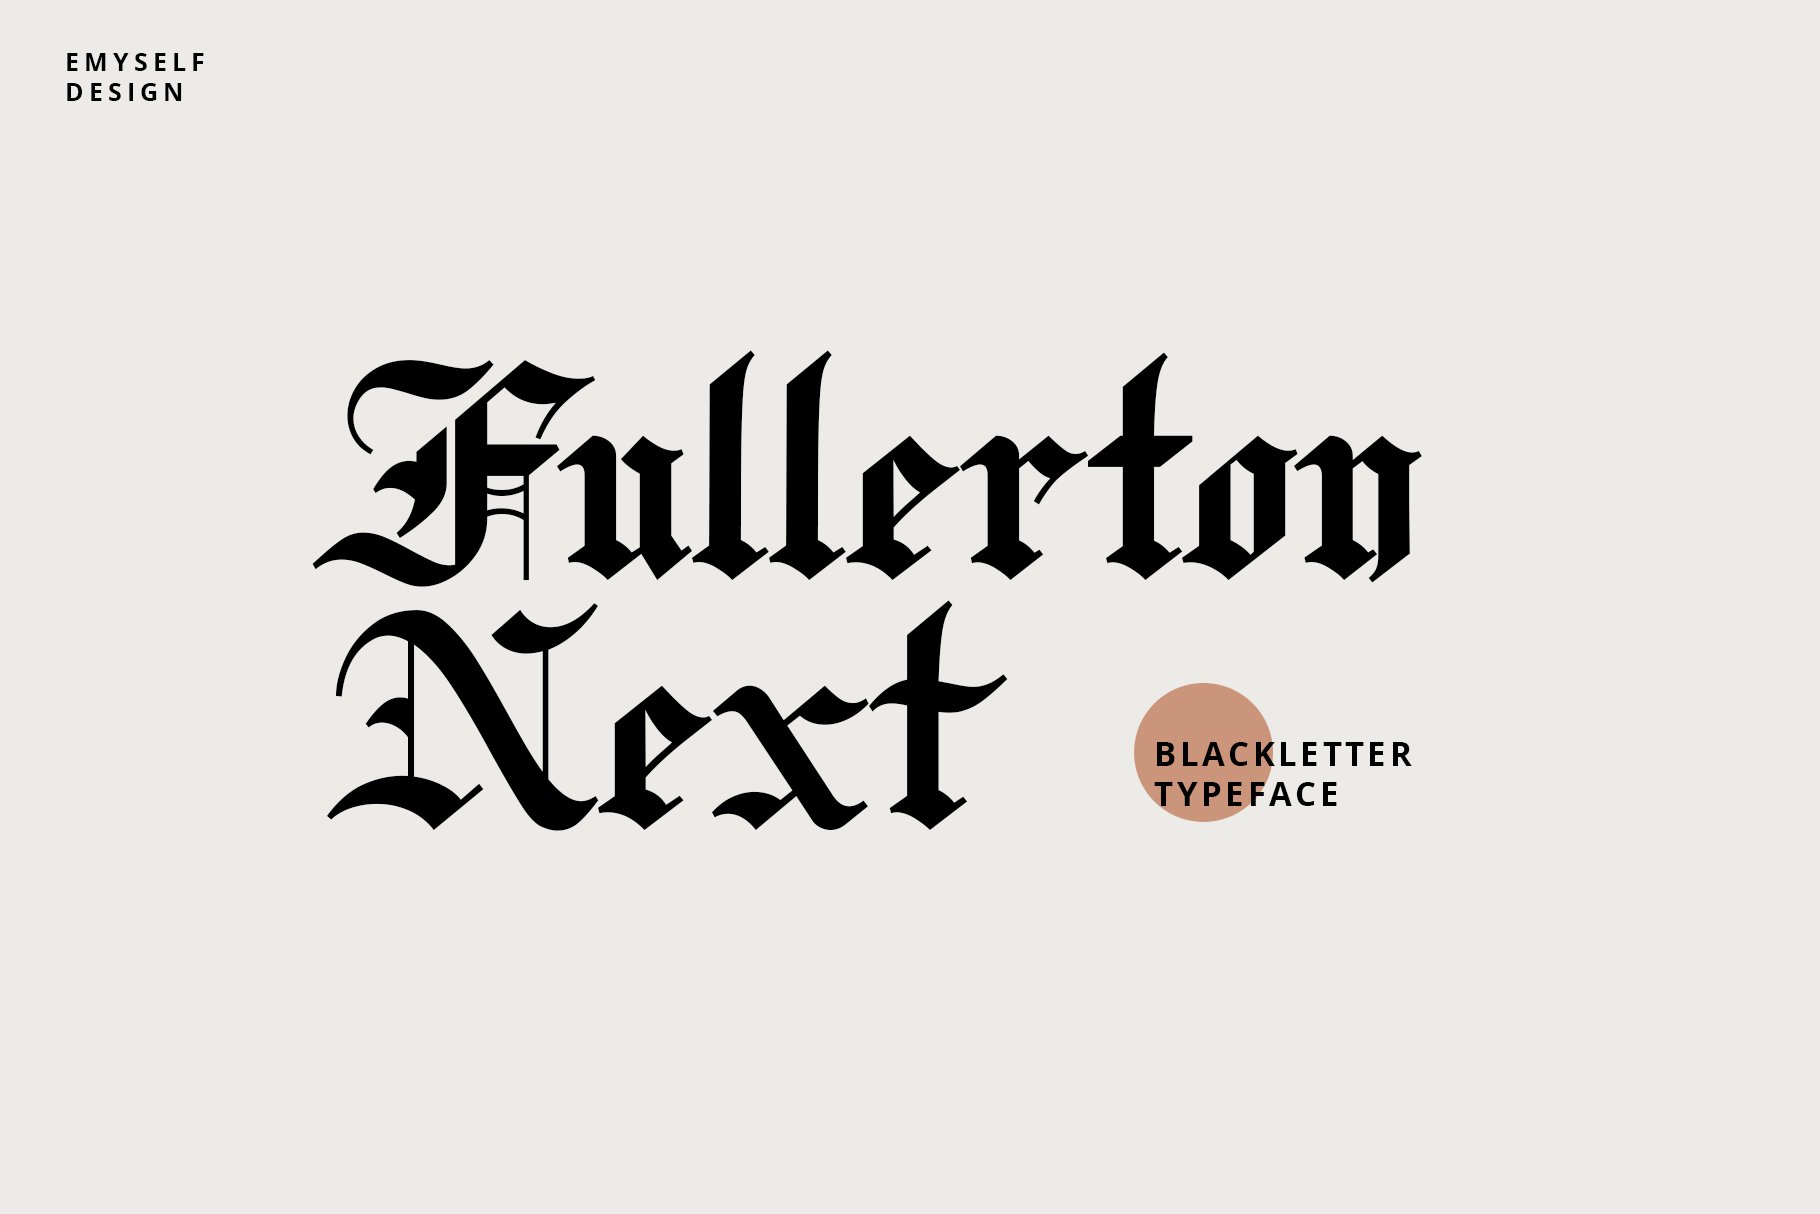 Fullerton Next cover image.